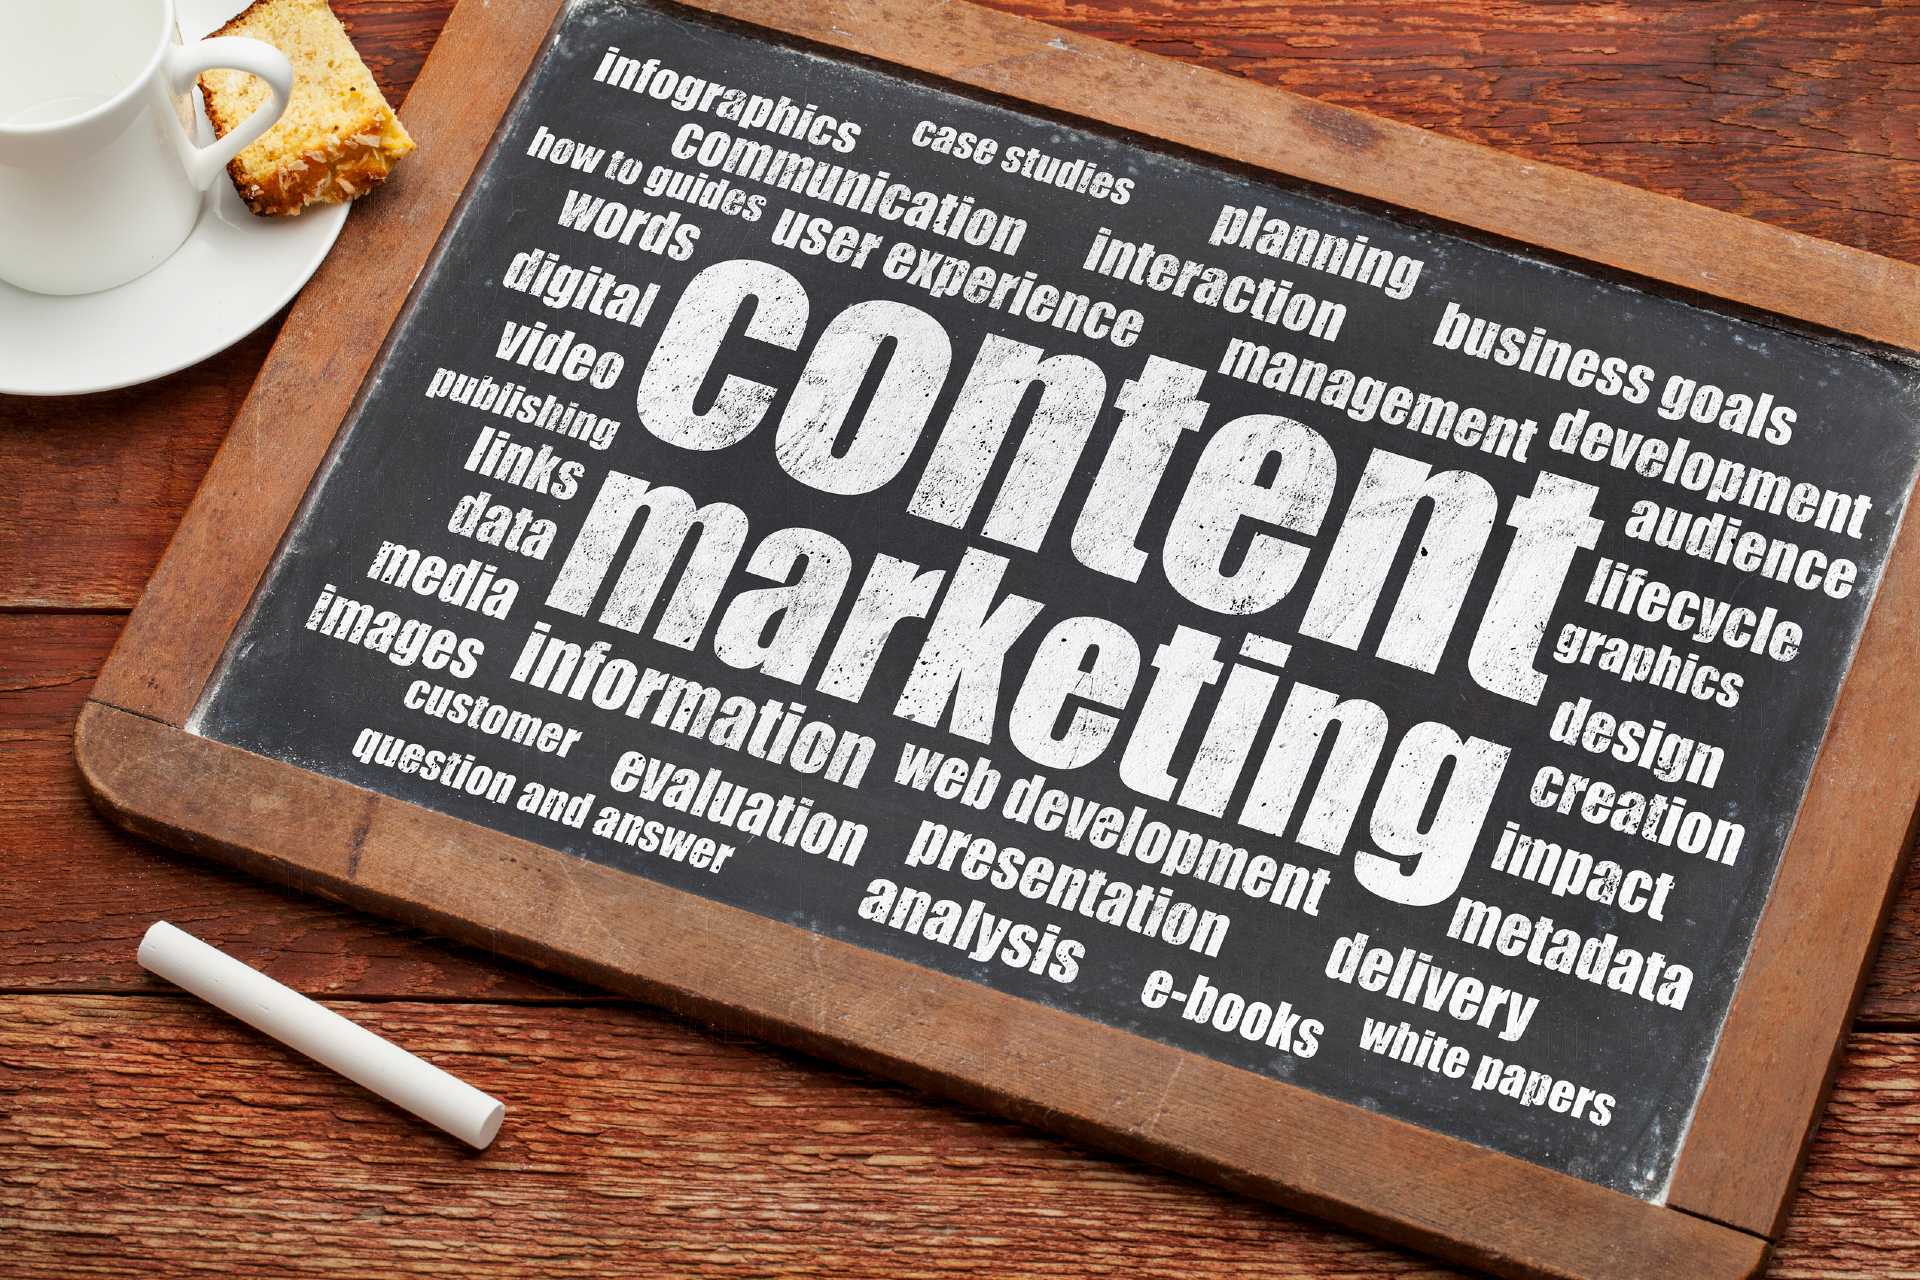 Blog content marketing